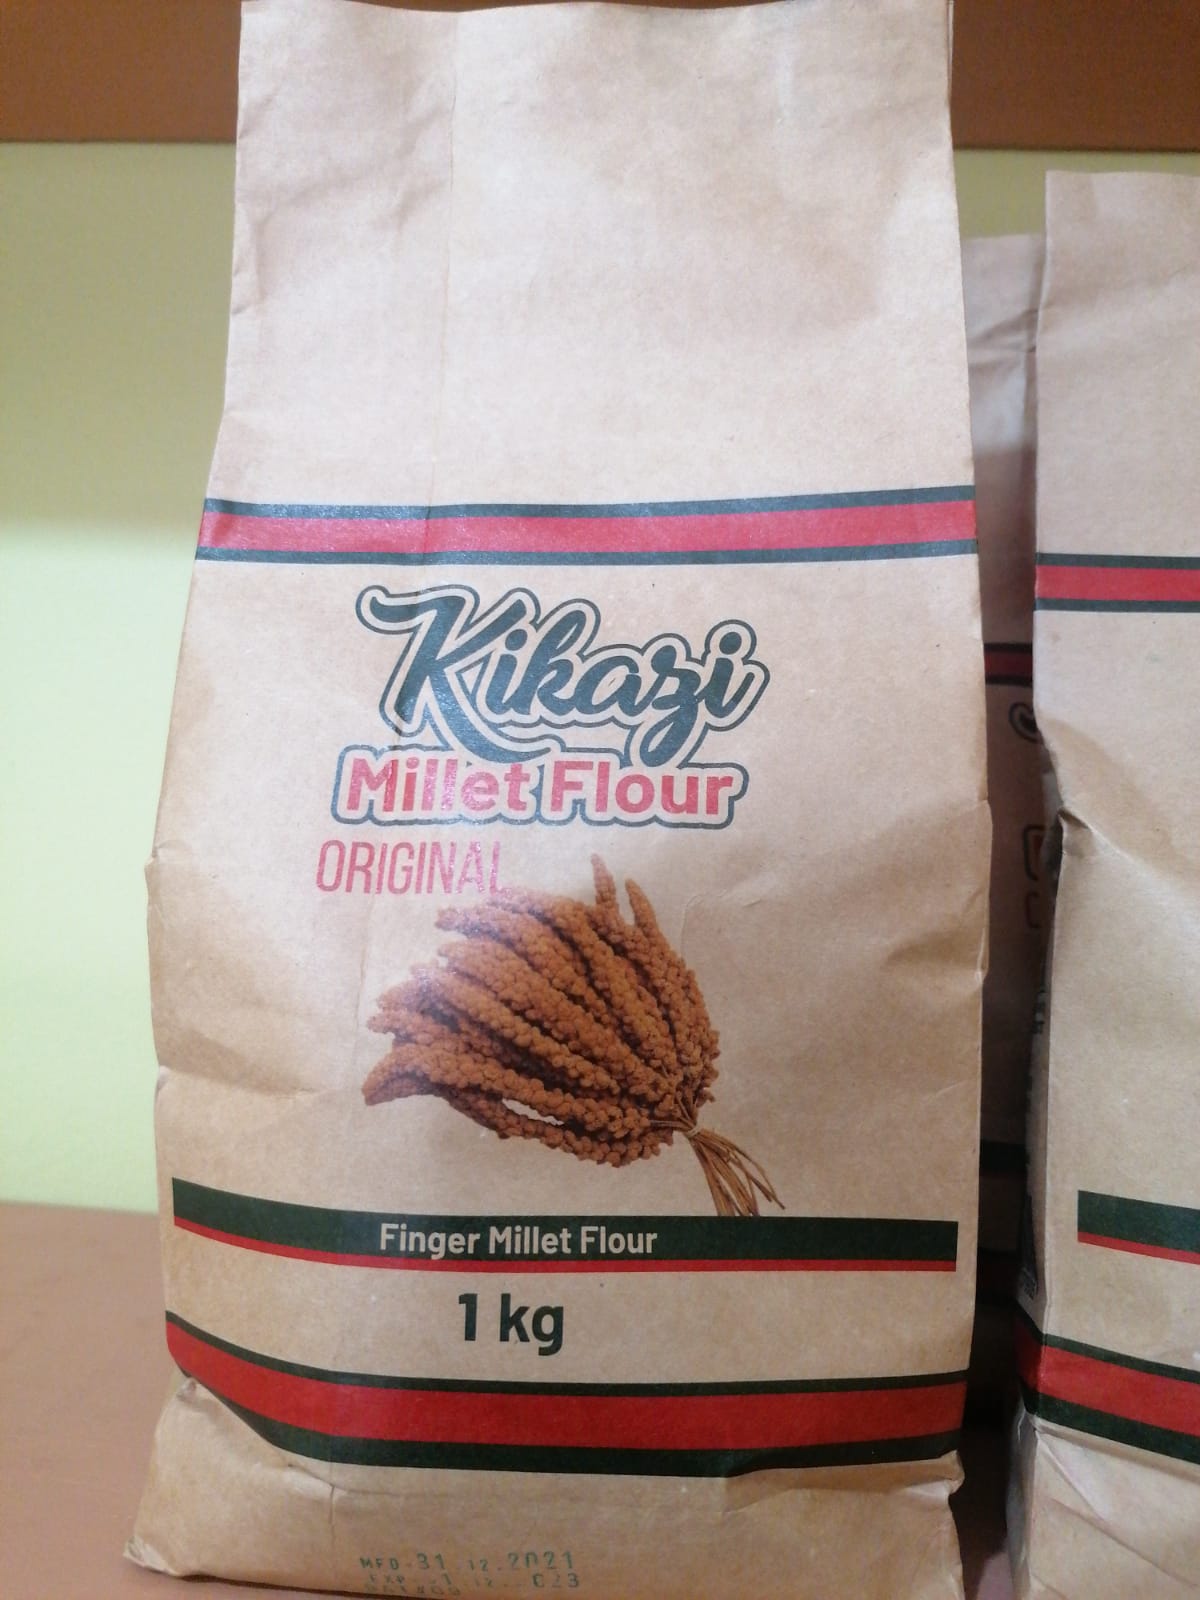 Kikazi millet porridge